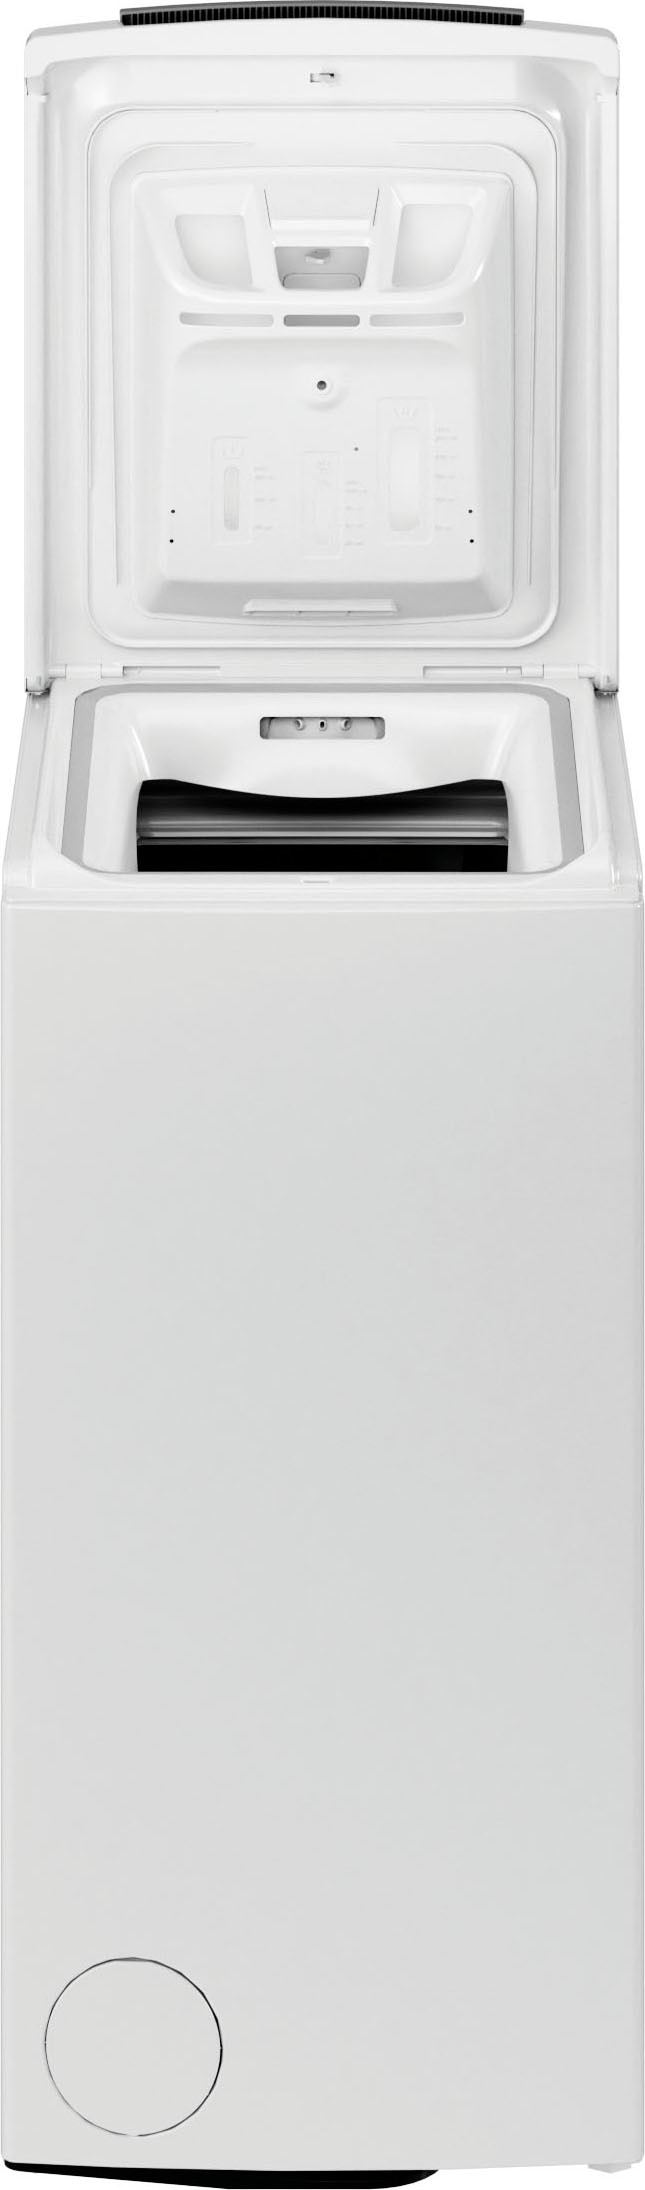 BAUKNECHT Waschmaschine Toplader »WMT ZEN 612 B SD«, WMT ZEN 612 B SD, 6 kg